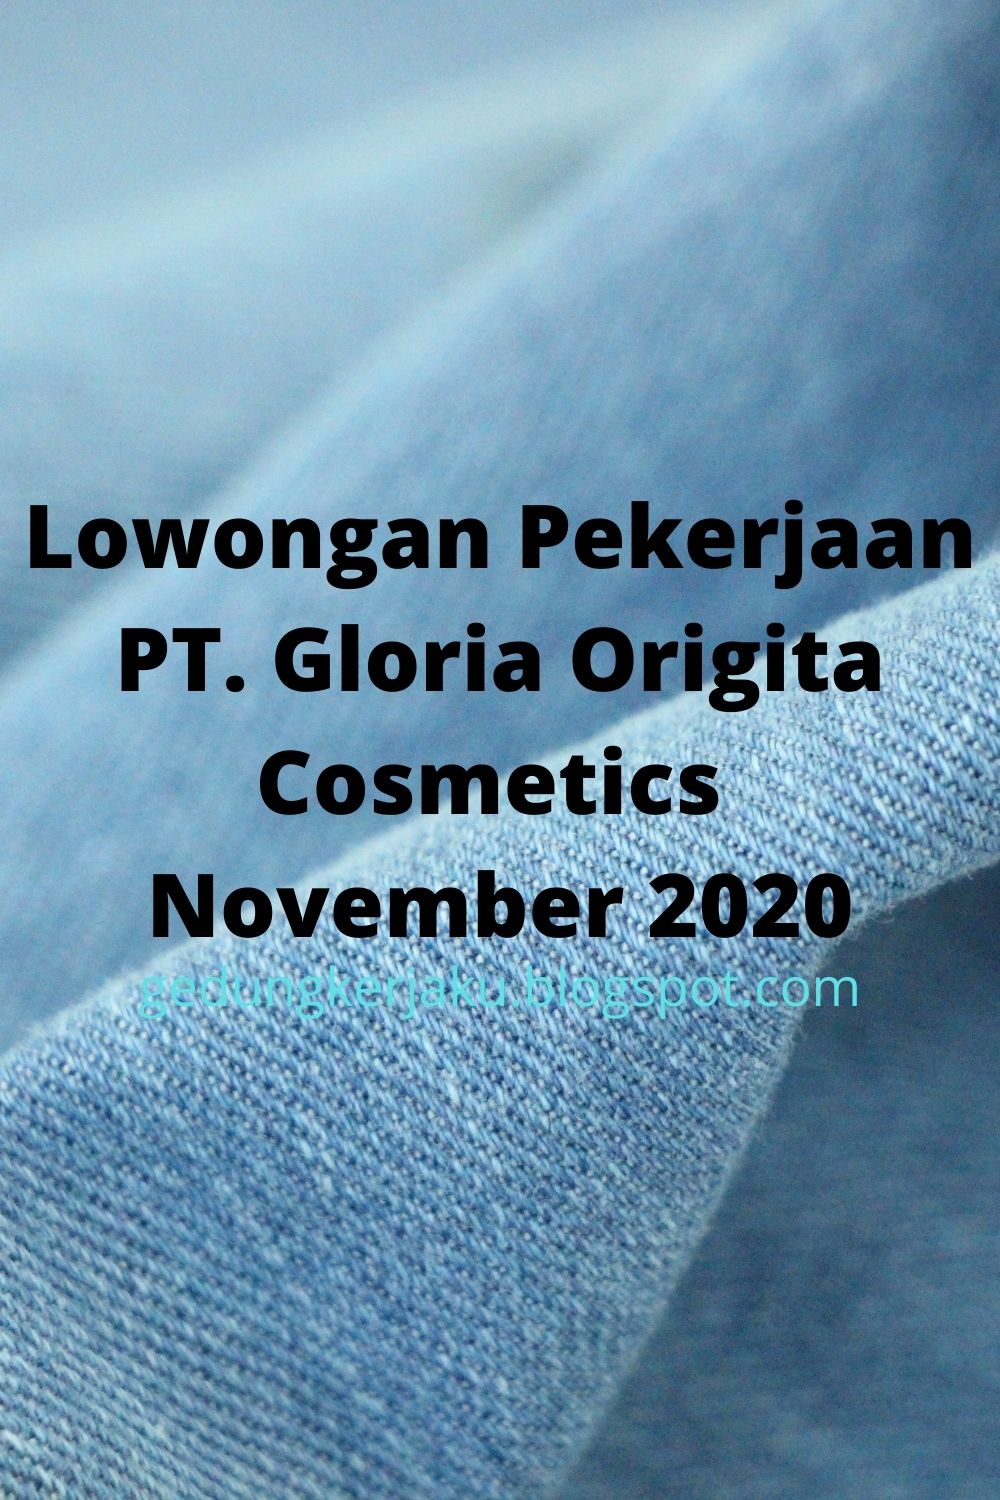 Lowongan Pekerjaan PT. Gloria Origita Cosmetics November 2020